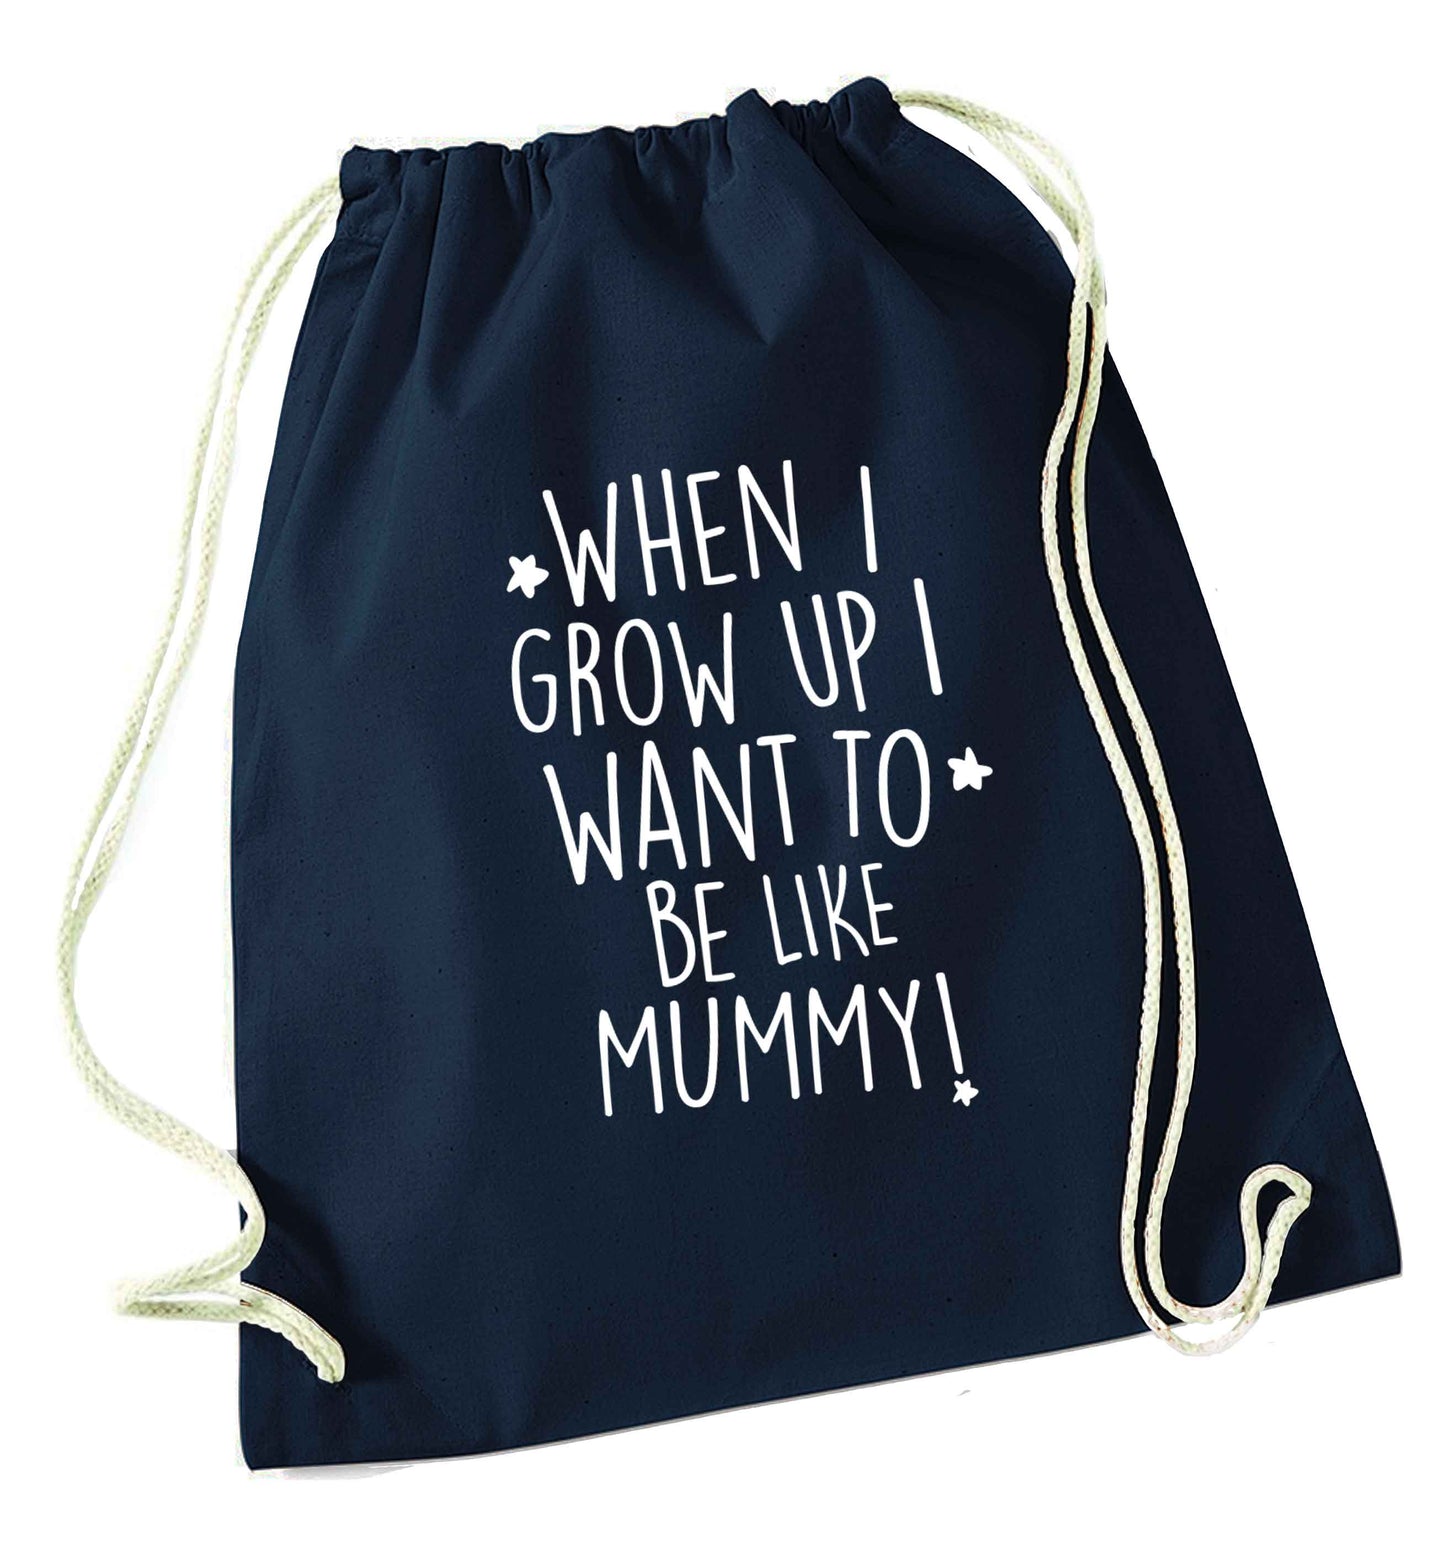 When I grow up I want to be like my mummy navy drawstring bag